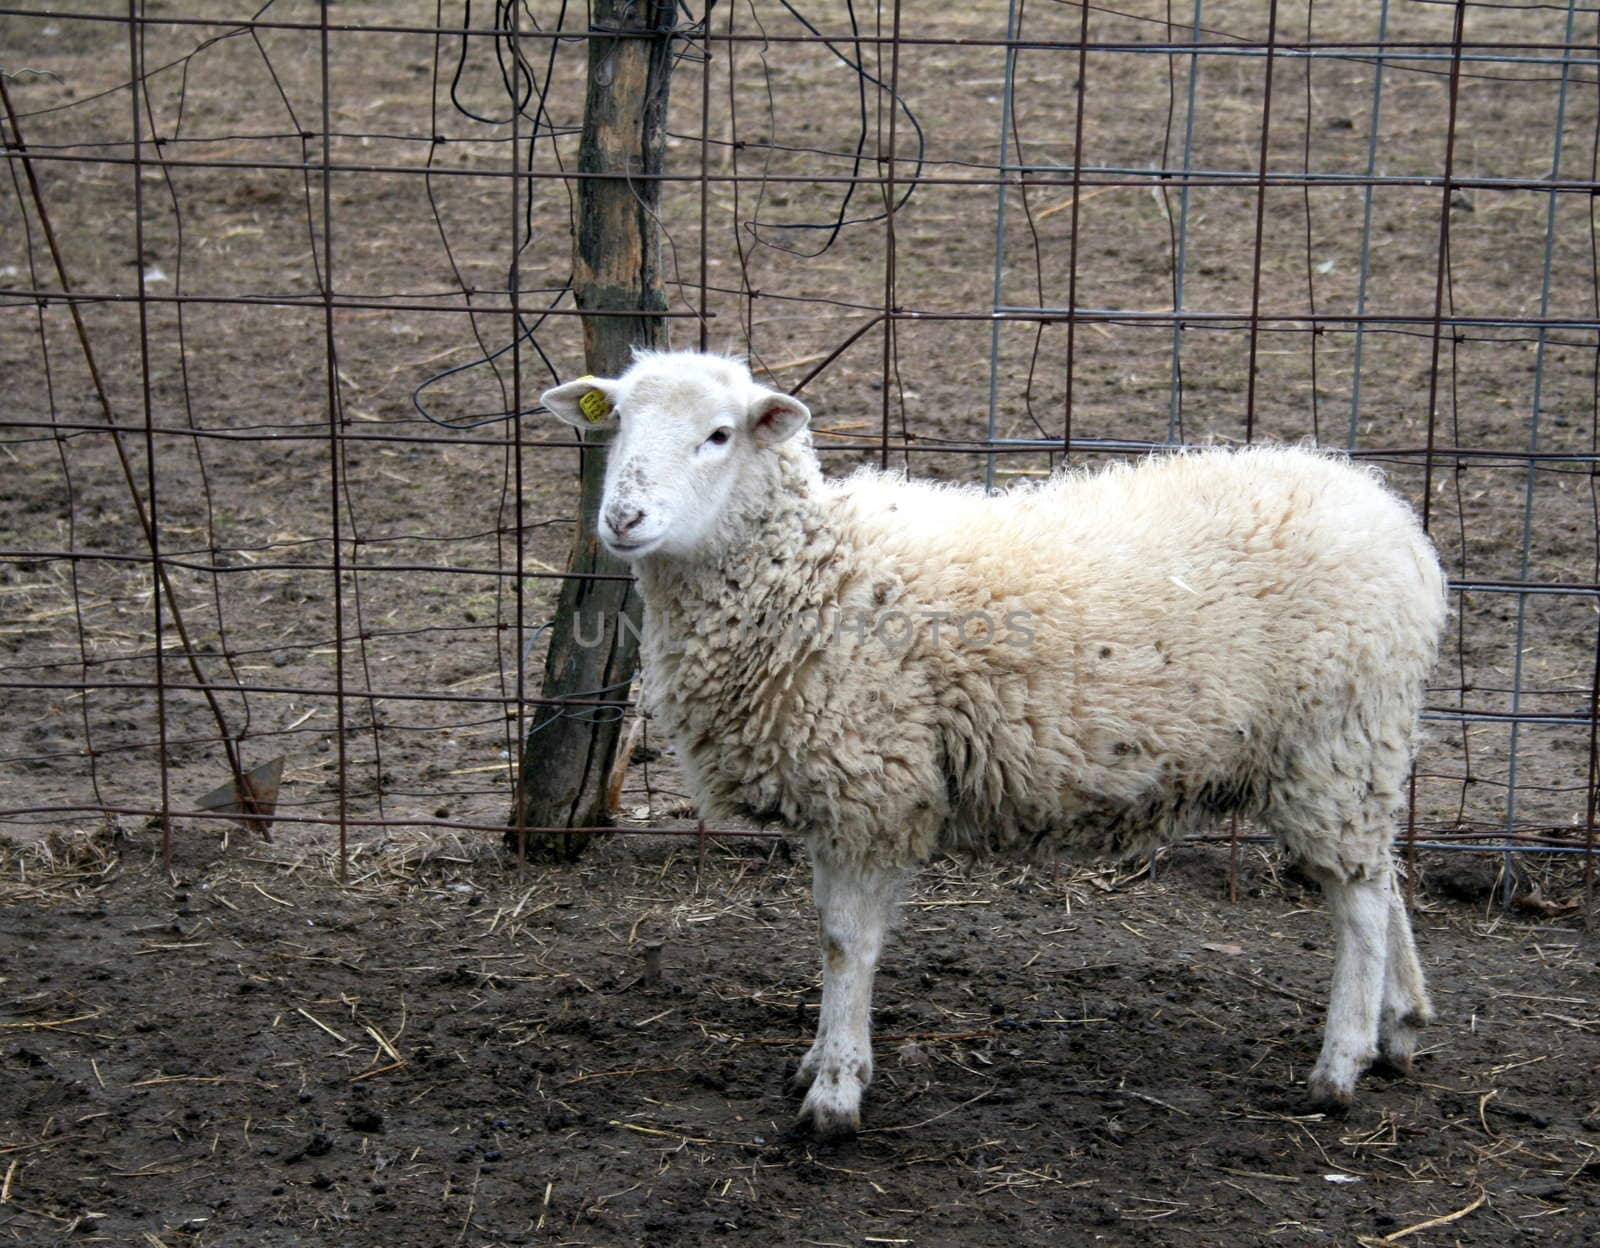 a sheep standing in a barnyard